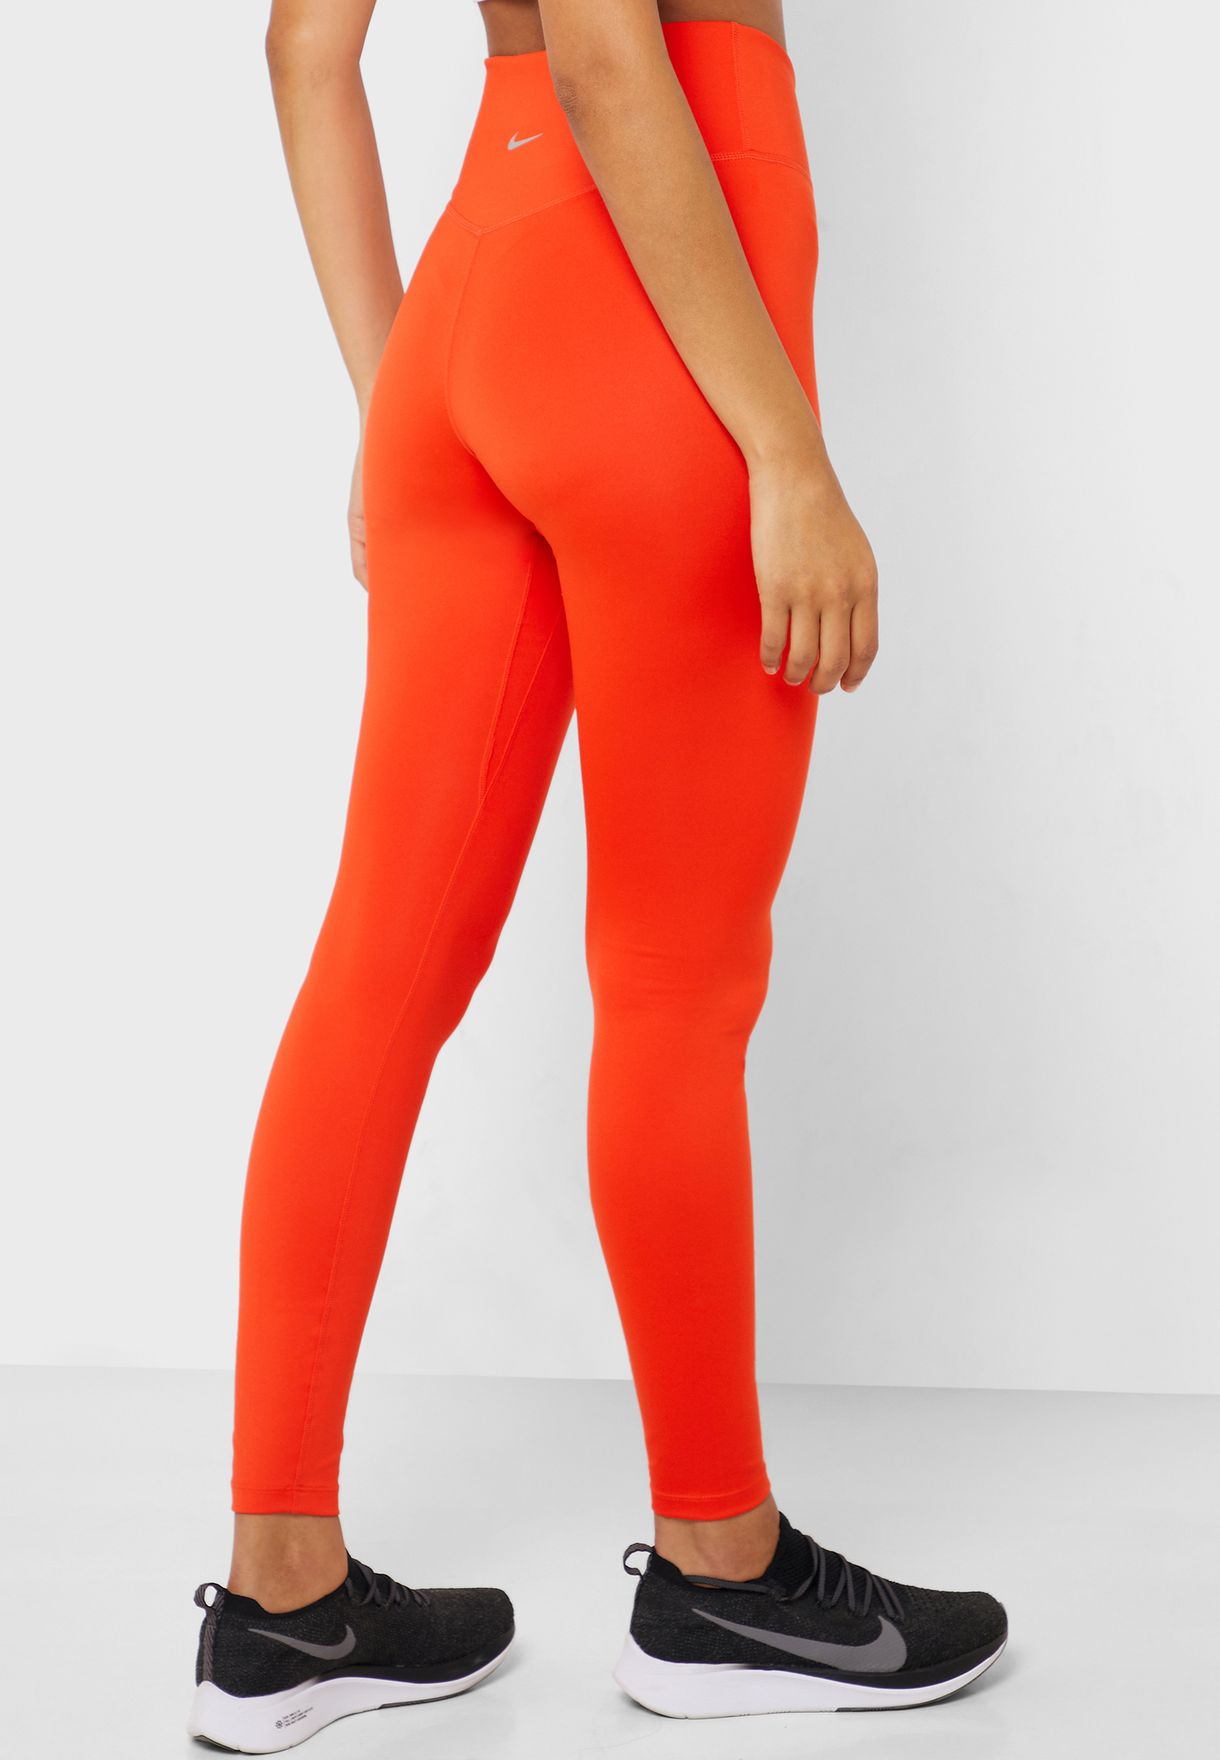 orange and black nike leggings